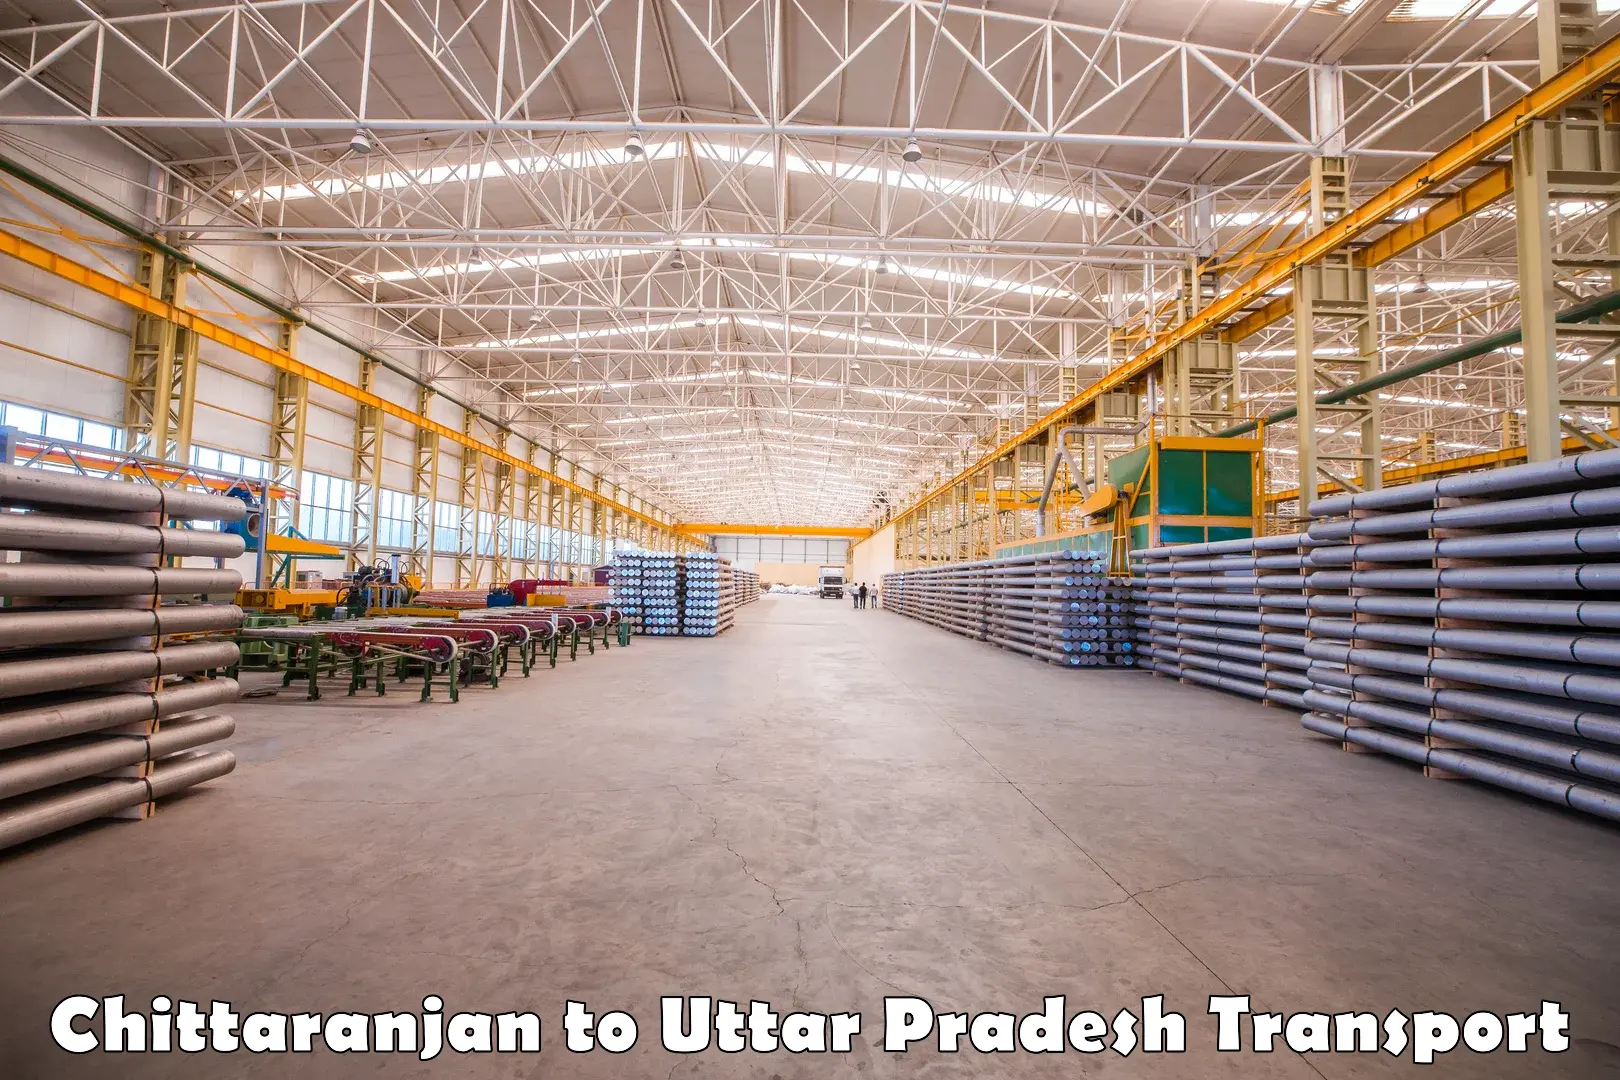 Air freight transport services in Chittaranjan to Uttar Pradesh